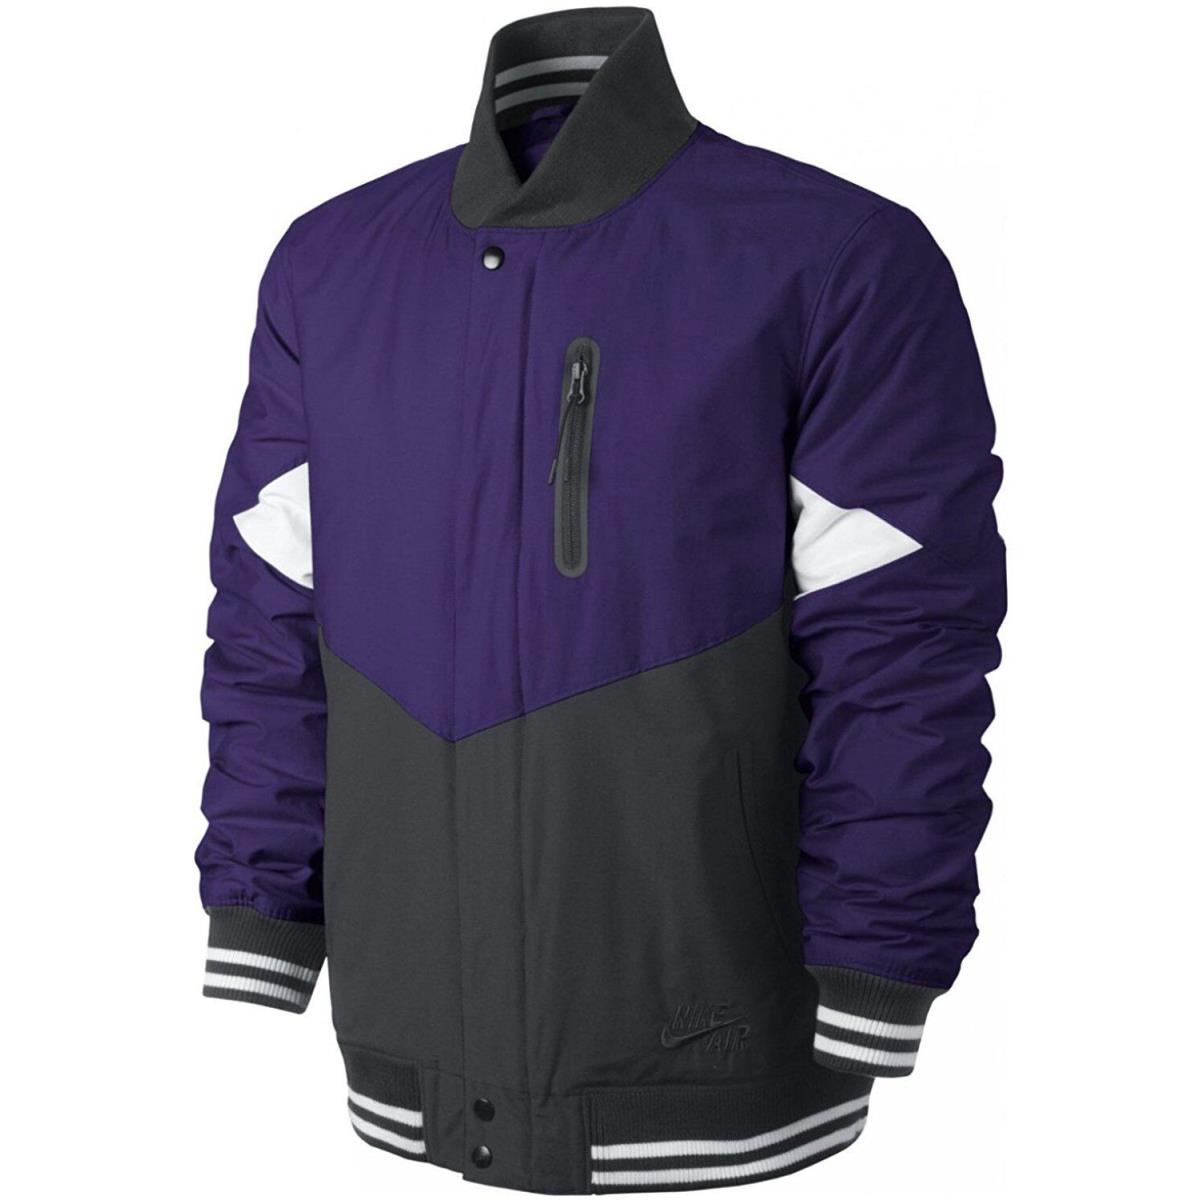 Nike Pivot Full-zip Men`s Coat. Purple/black. Medium